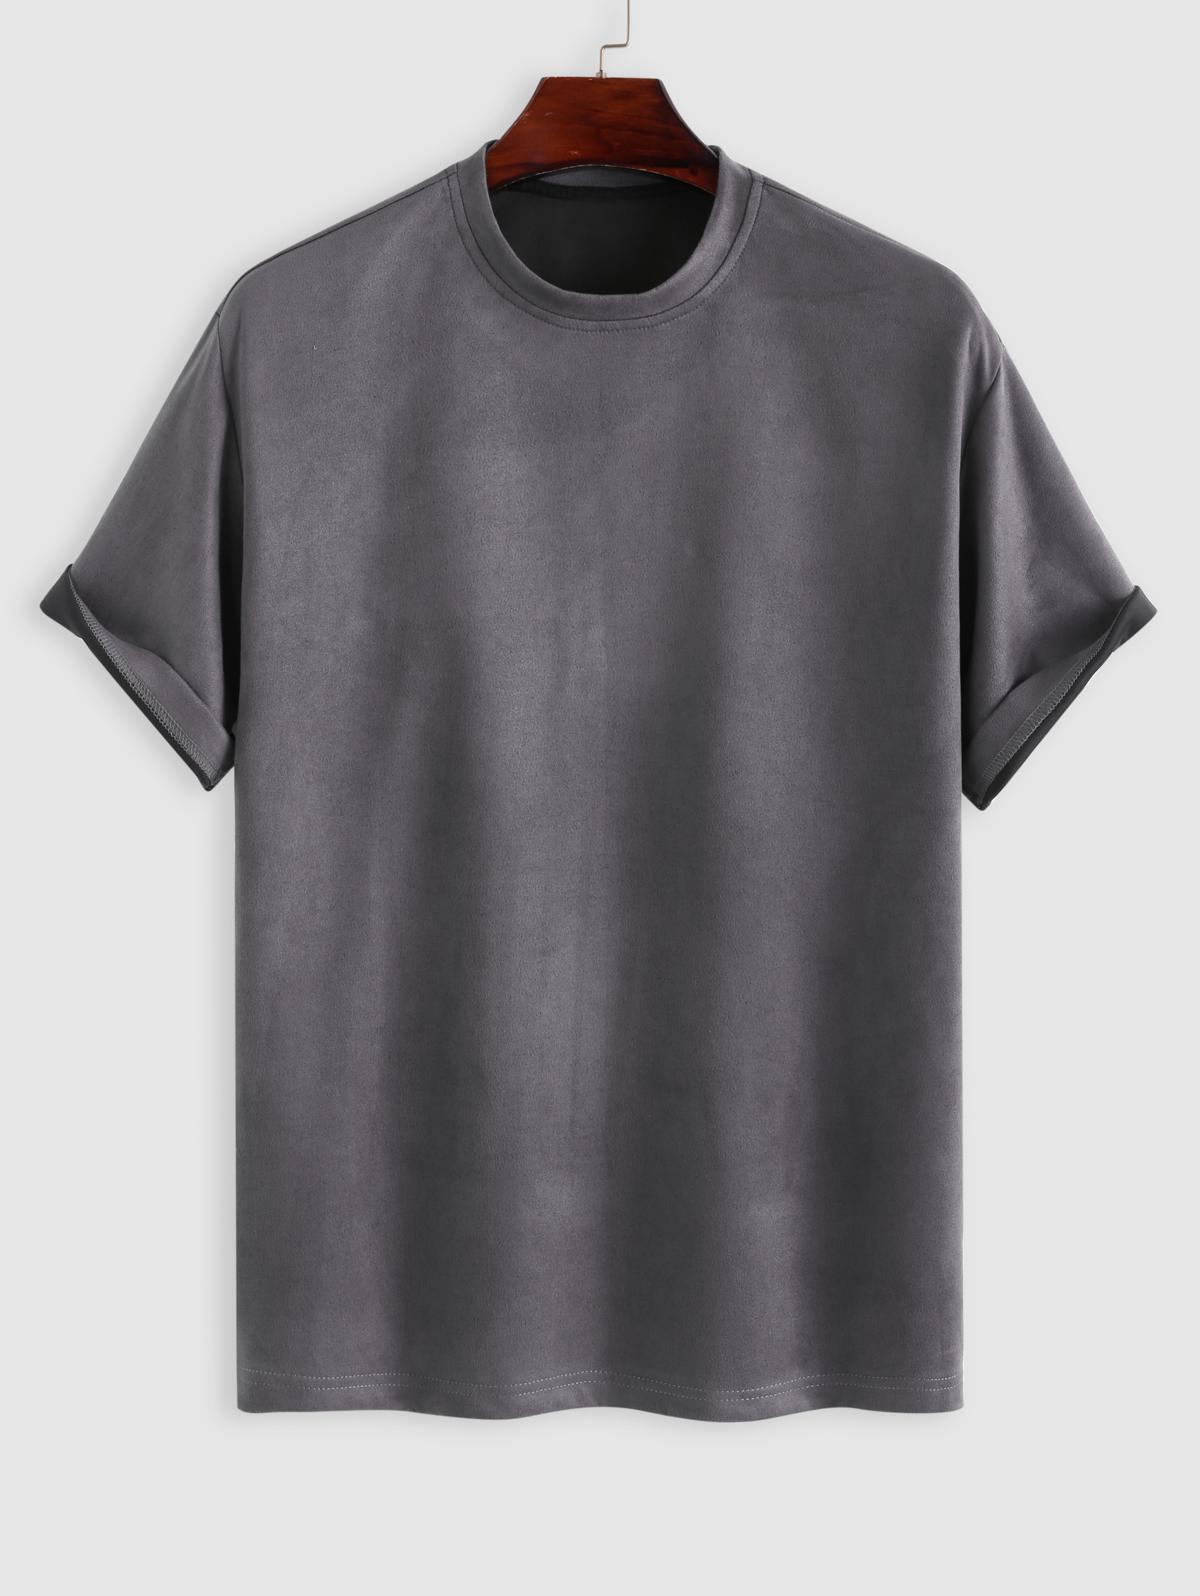 ZAFUL Men's Retro Faux Suede Fabric Plain Short Sleeves T Shirt L Gray